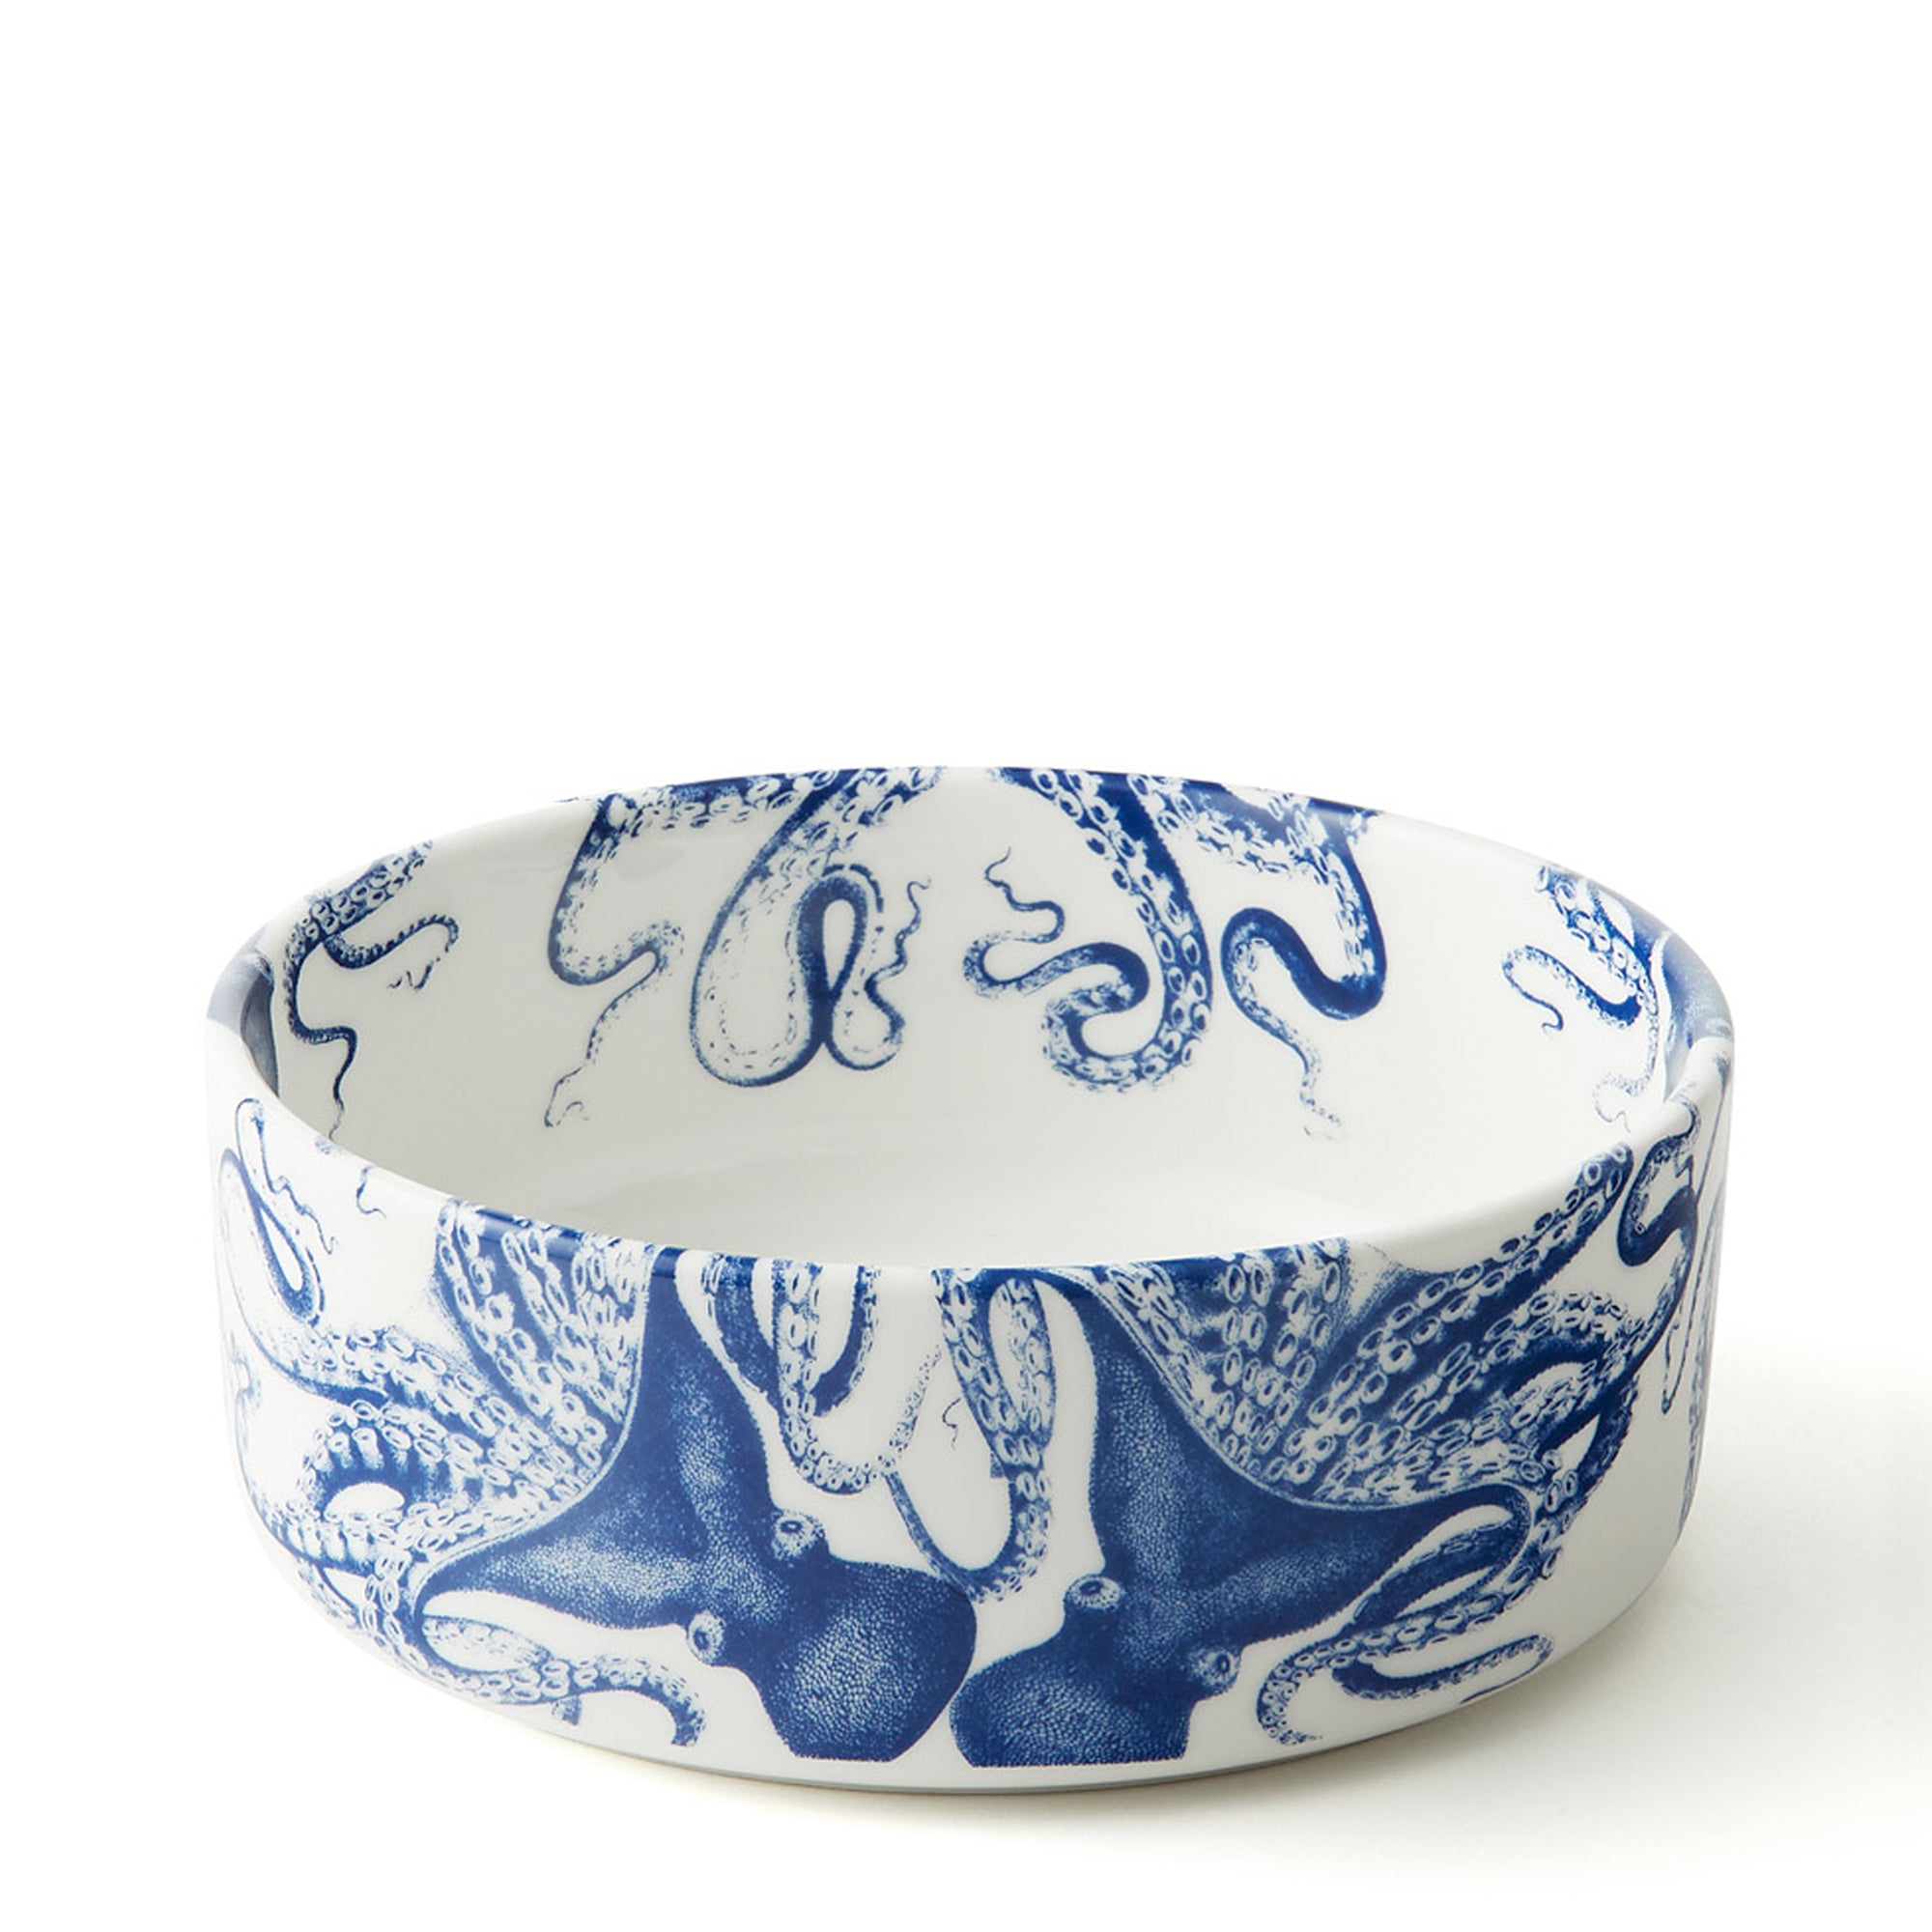 Lucy the octopus blue and white premium porcelain medium pet bowl from Caskata.